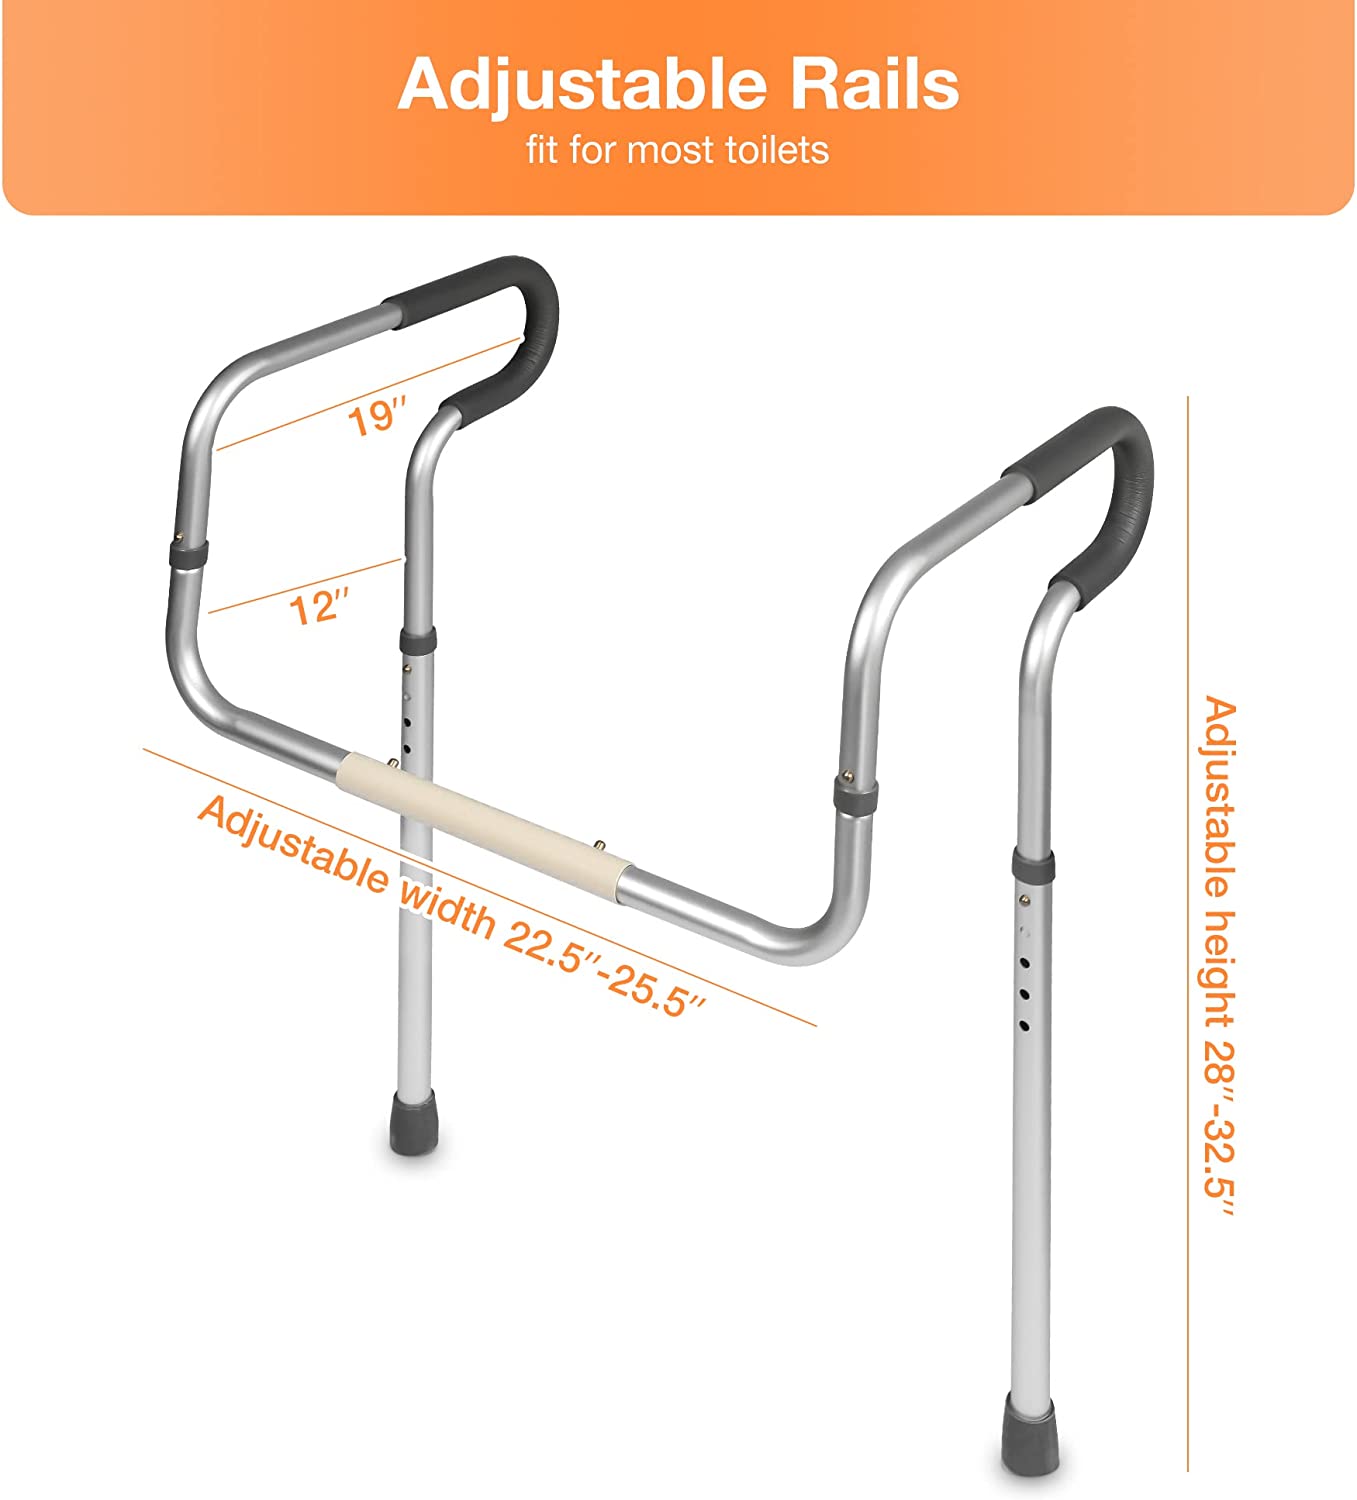 Aluminum Safety Toilet Rail - Handrail Toilet Bars with Adjustable Height